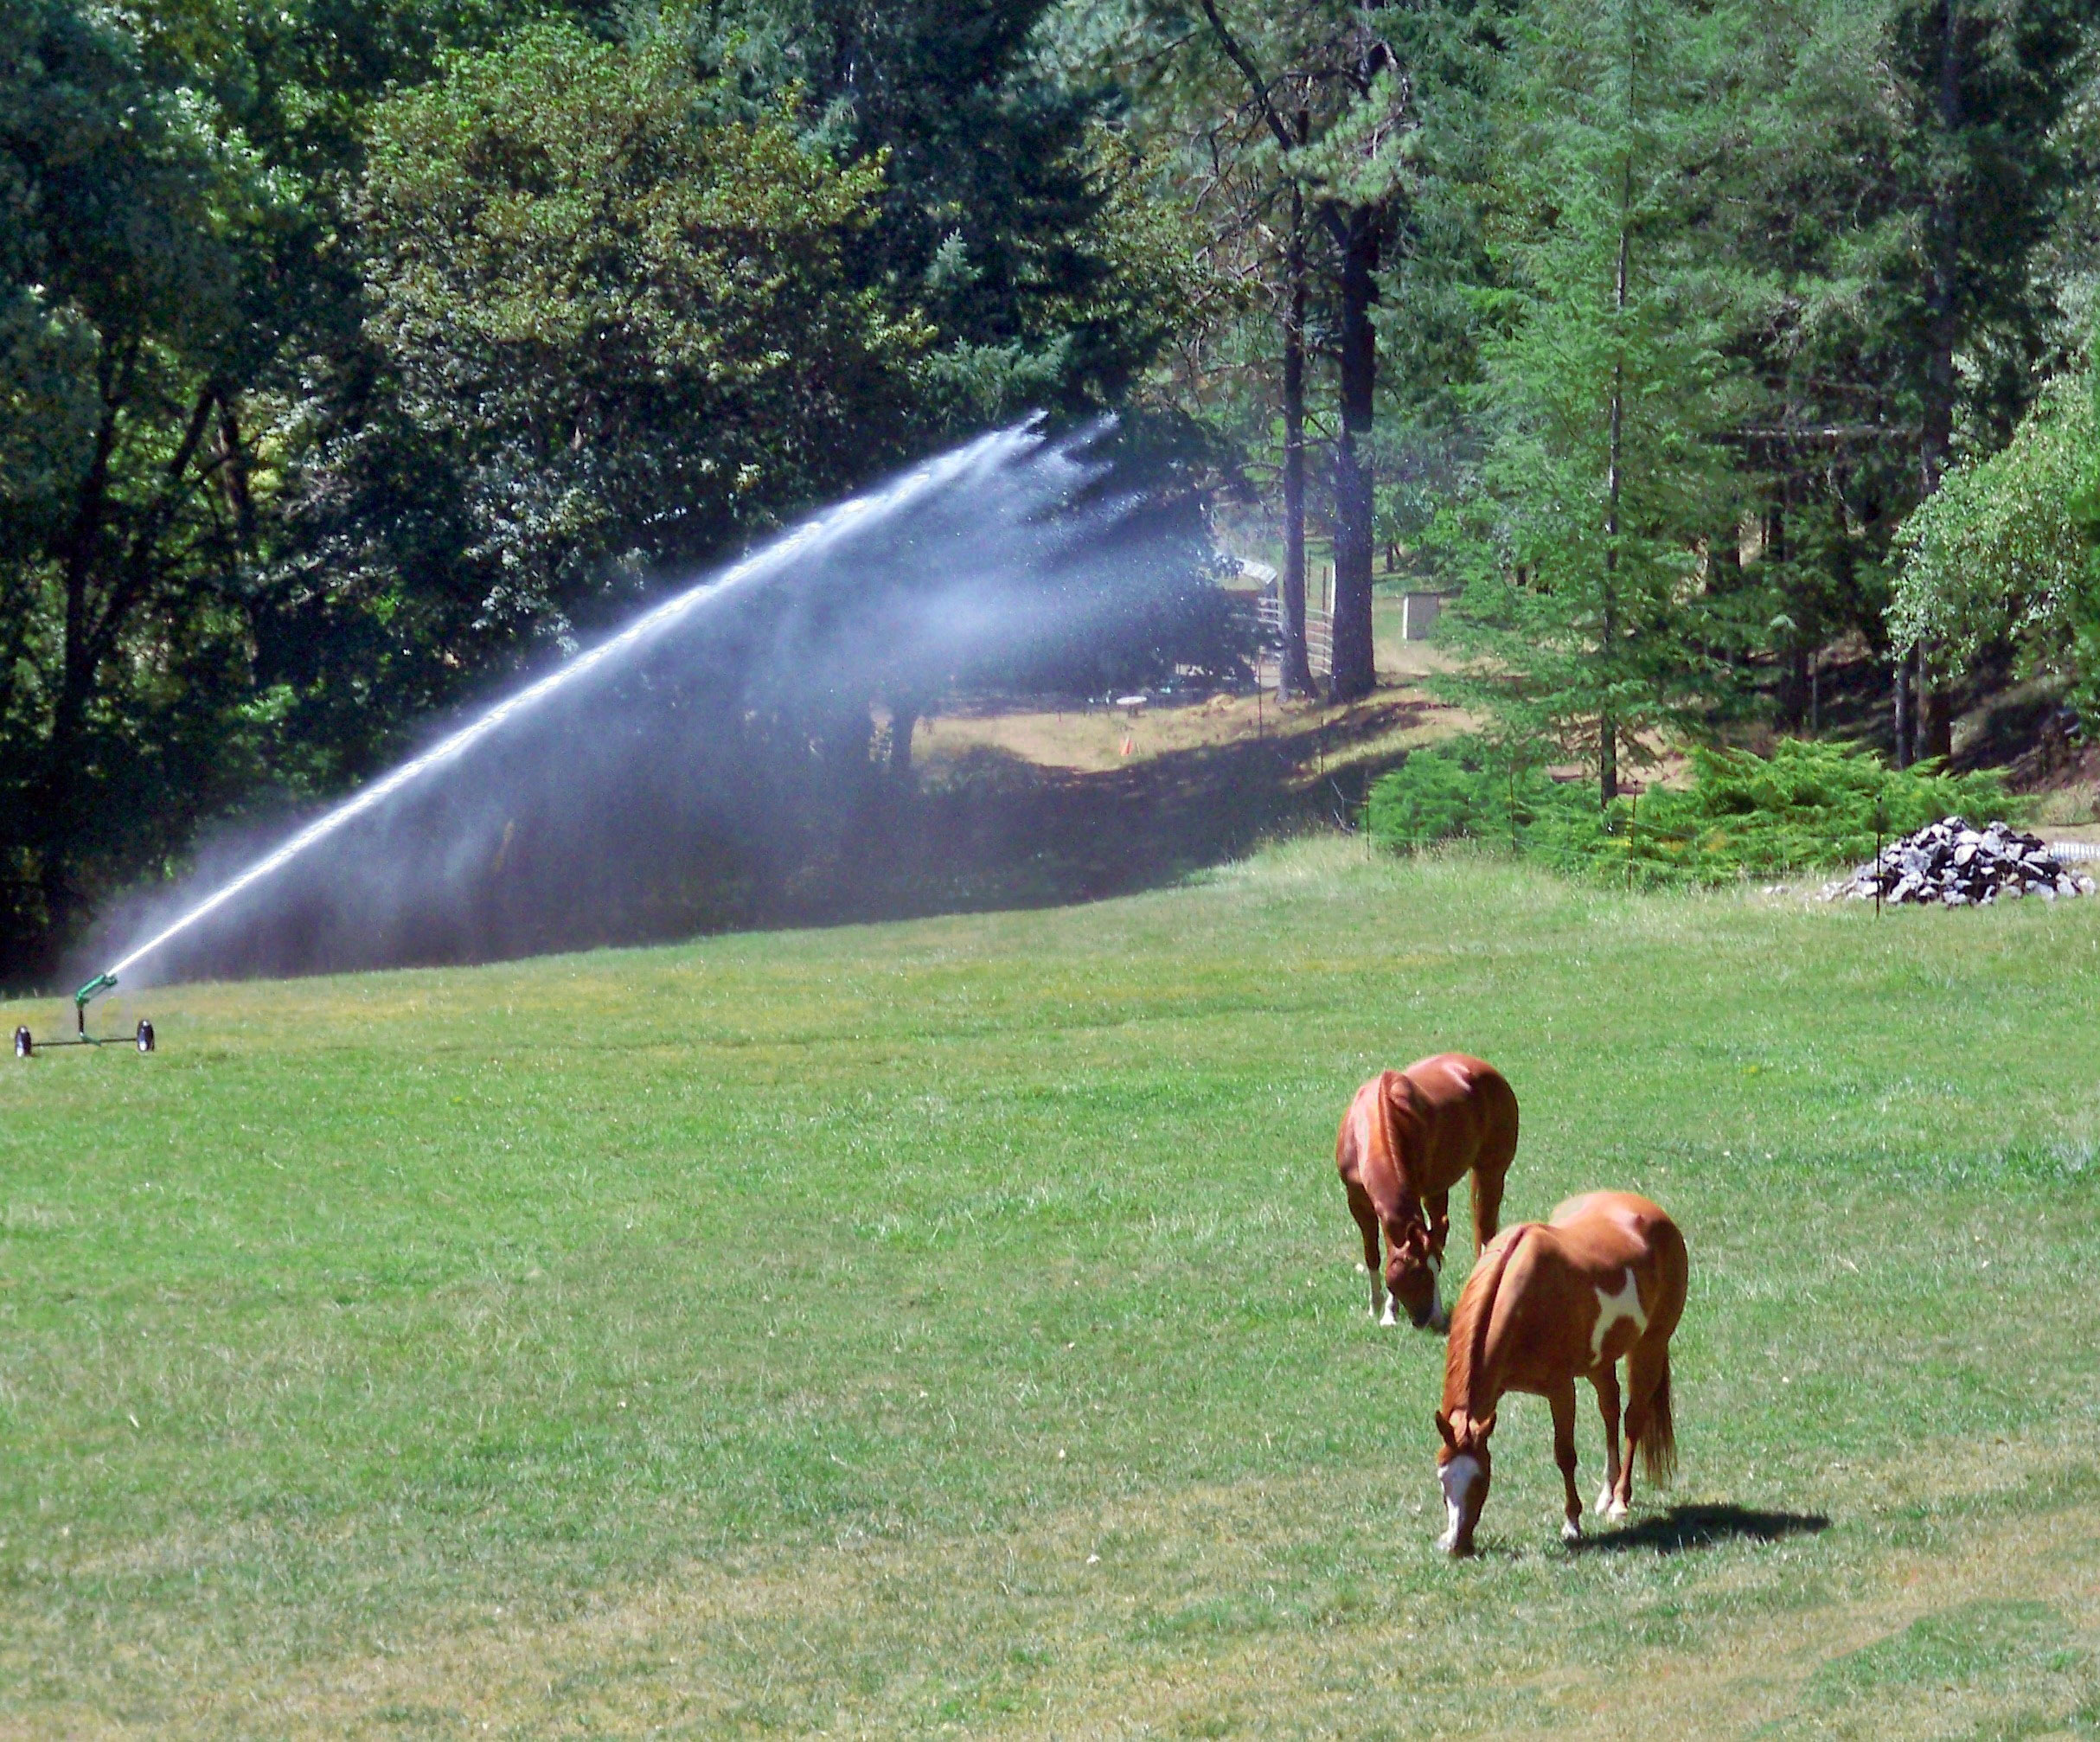 Let Big Sprinkler help you keep the dust down